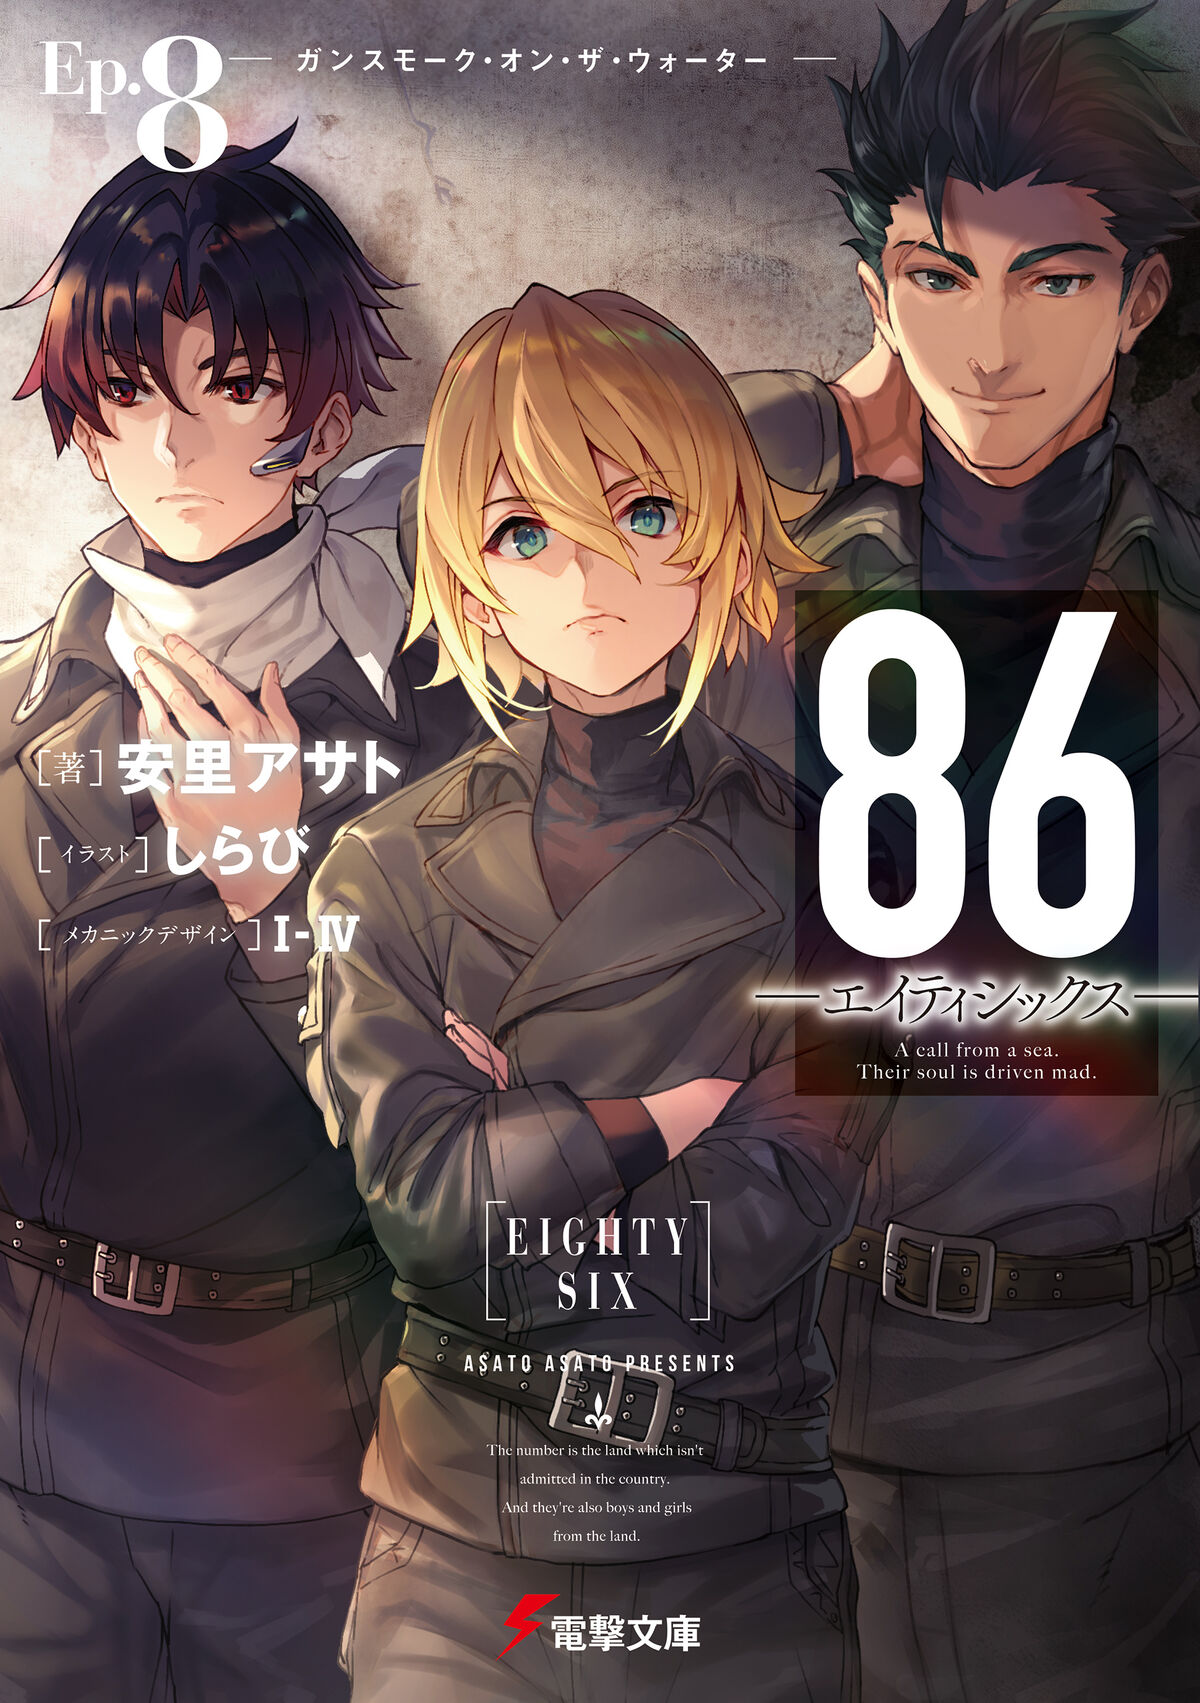 Light Novel Volume 8 | 86 - Eighty Six - Wiki | Fandom